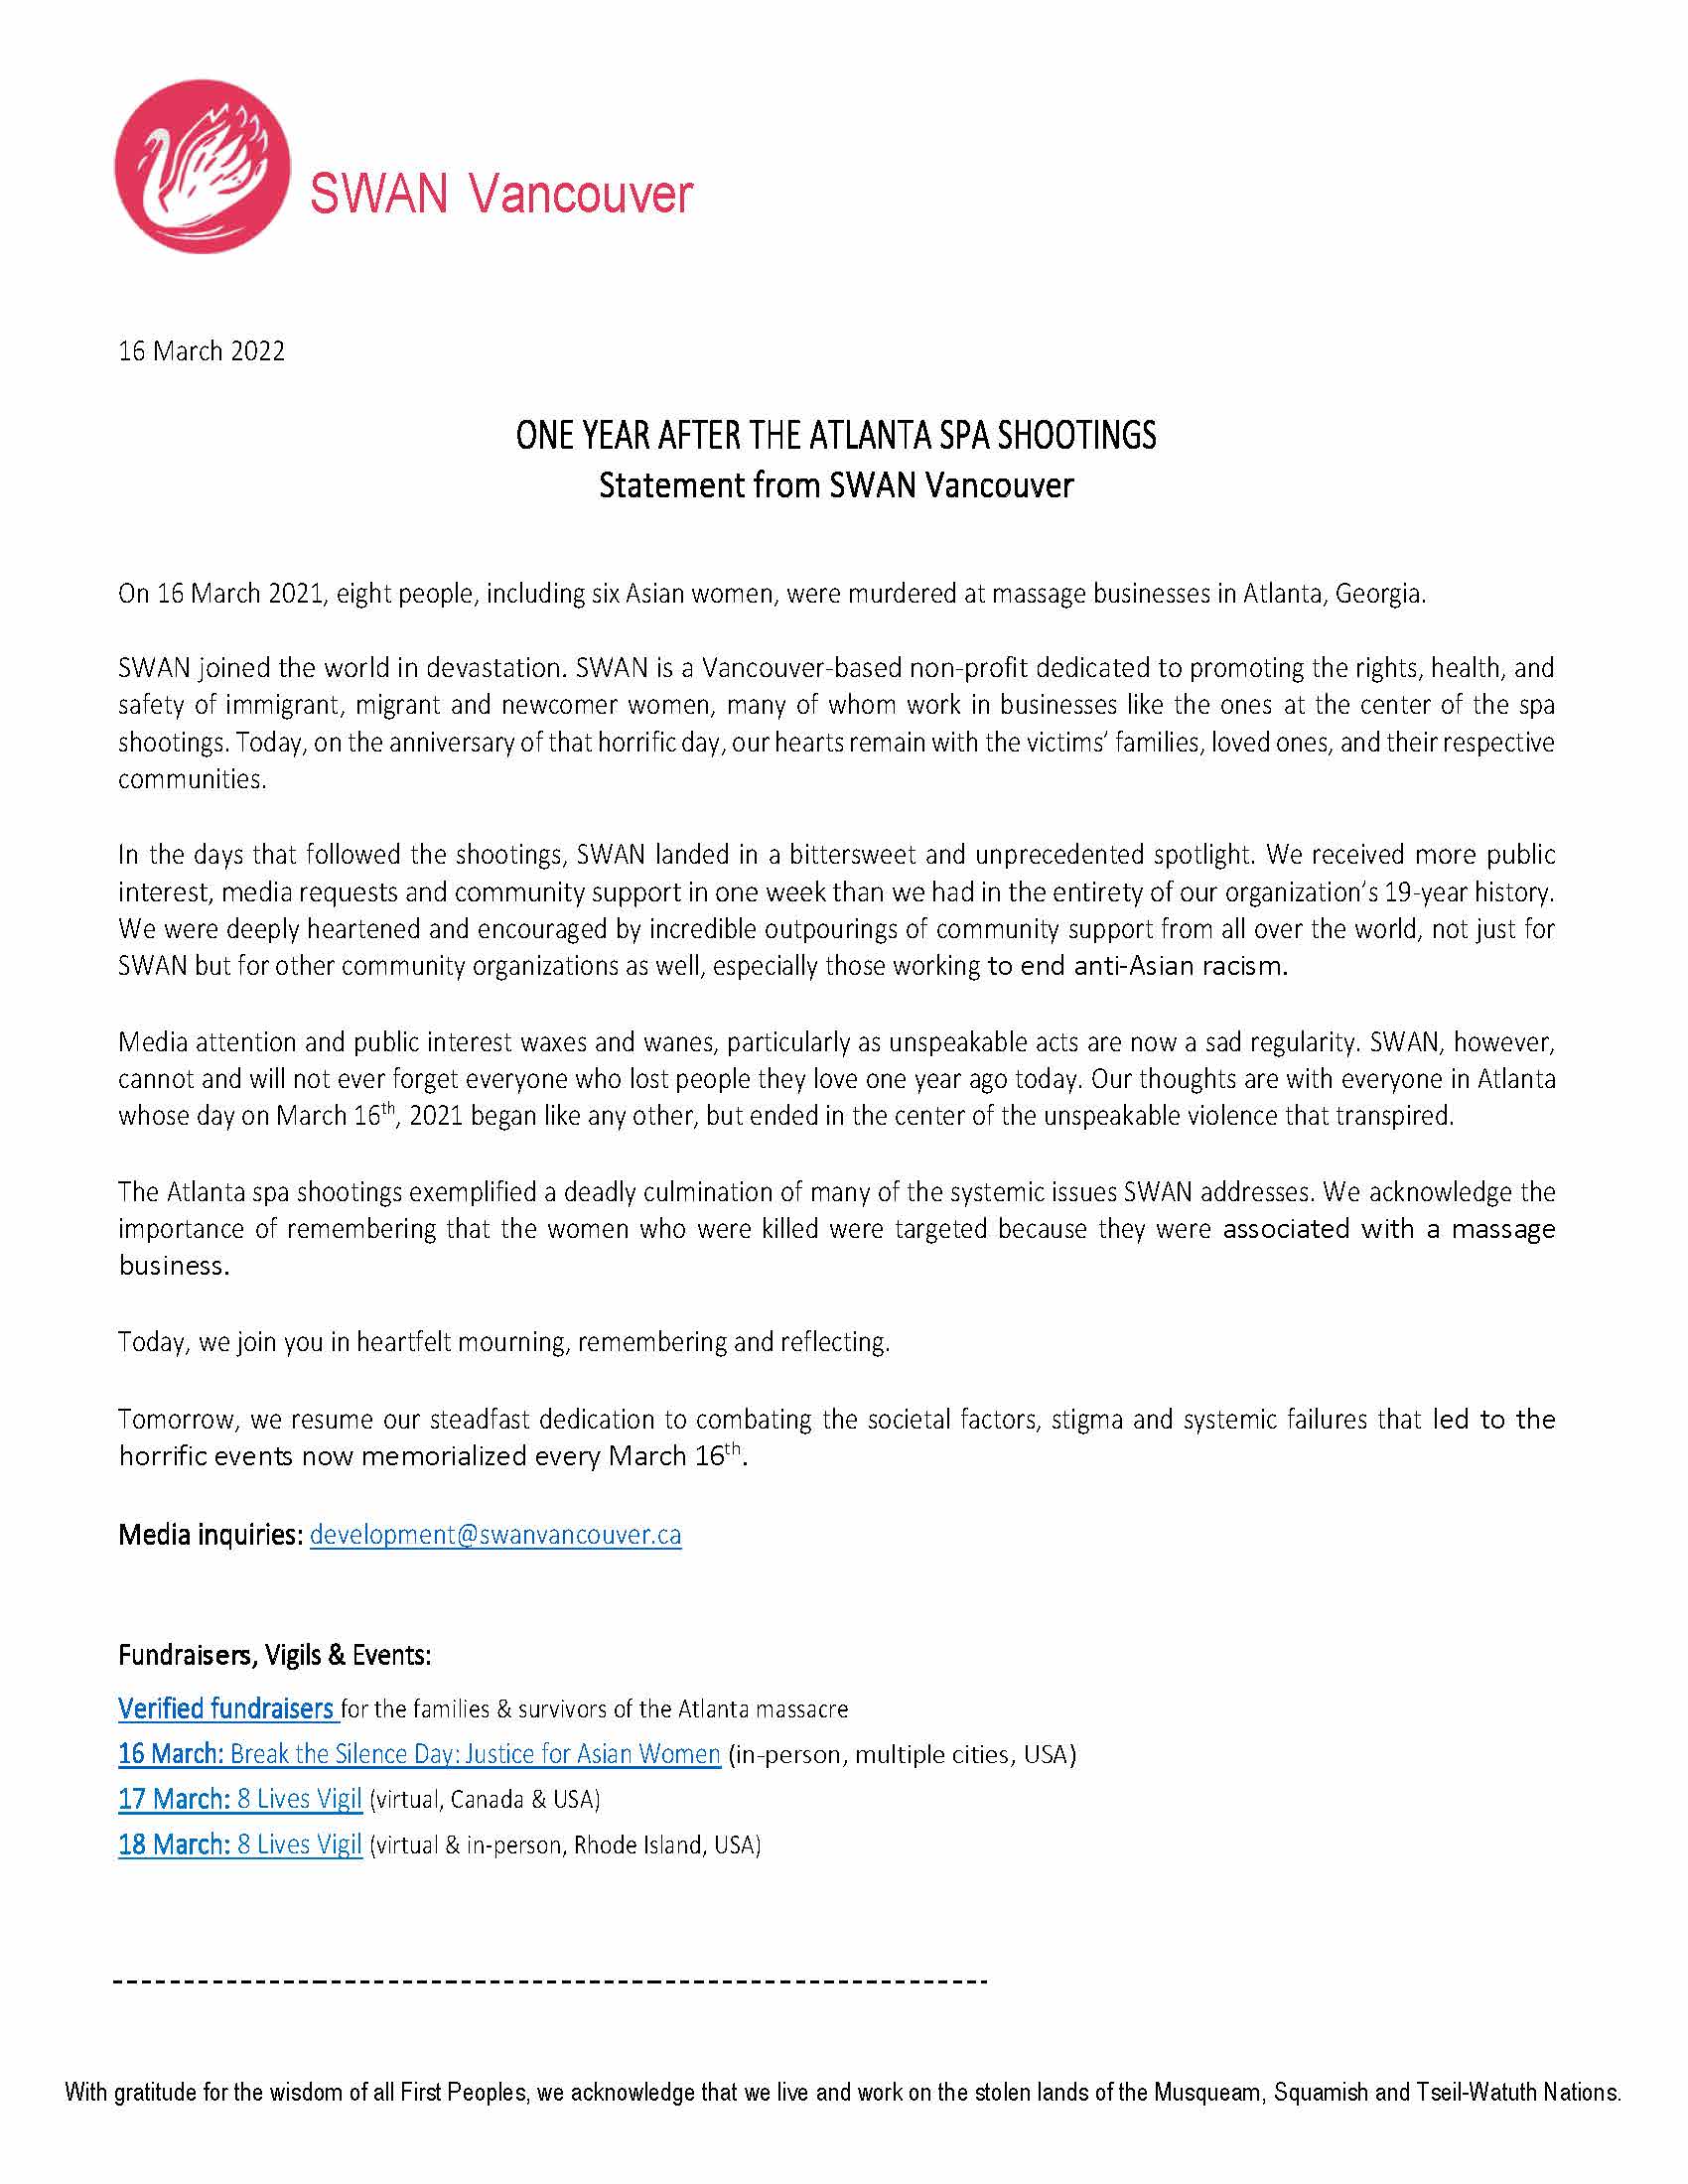 SWAN's statement on March 16, Atlanta shootings anniversary